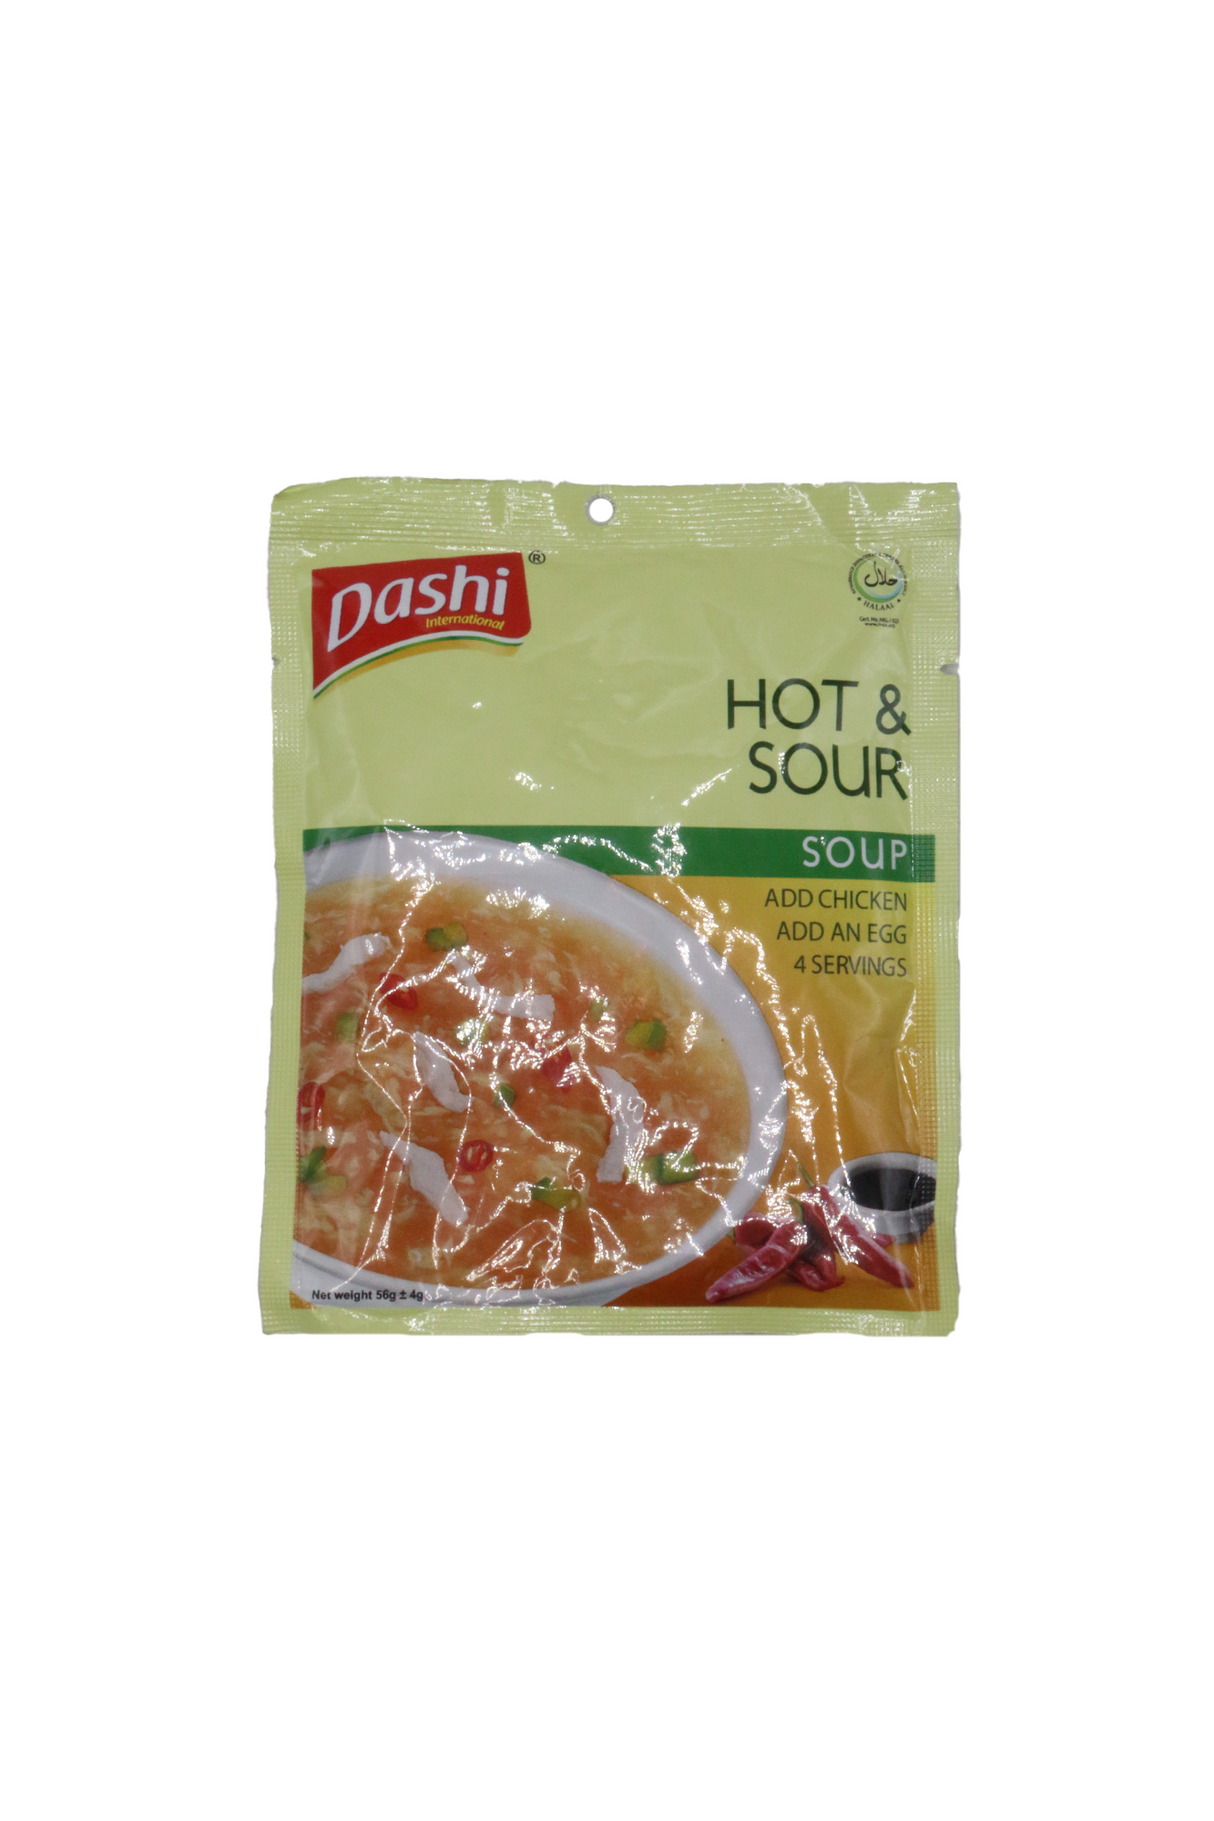 dashi soup hot&sour 56g